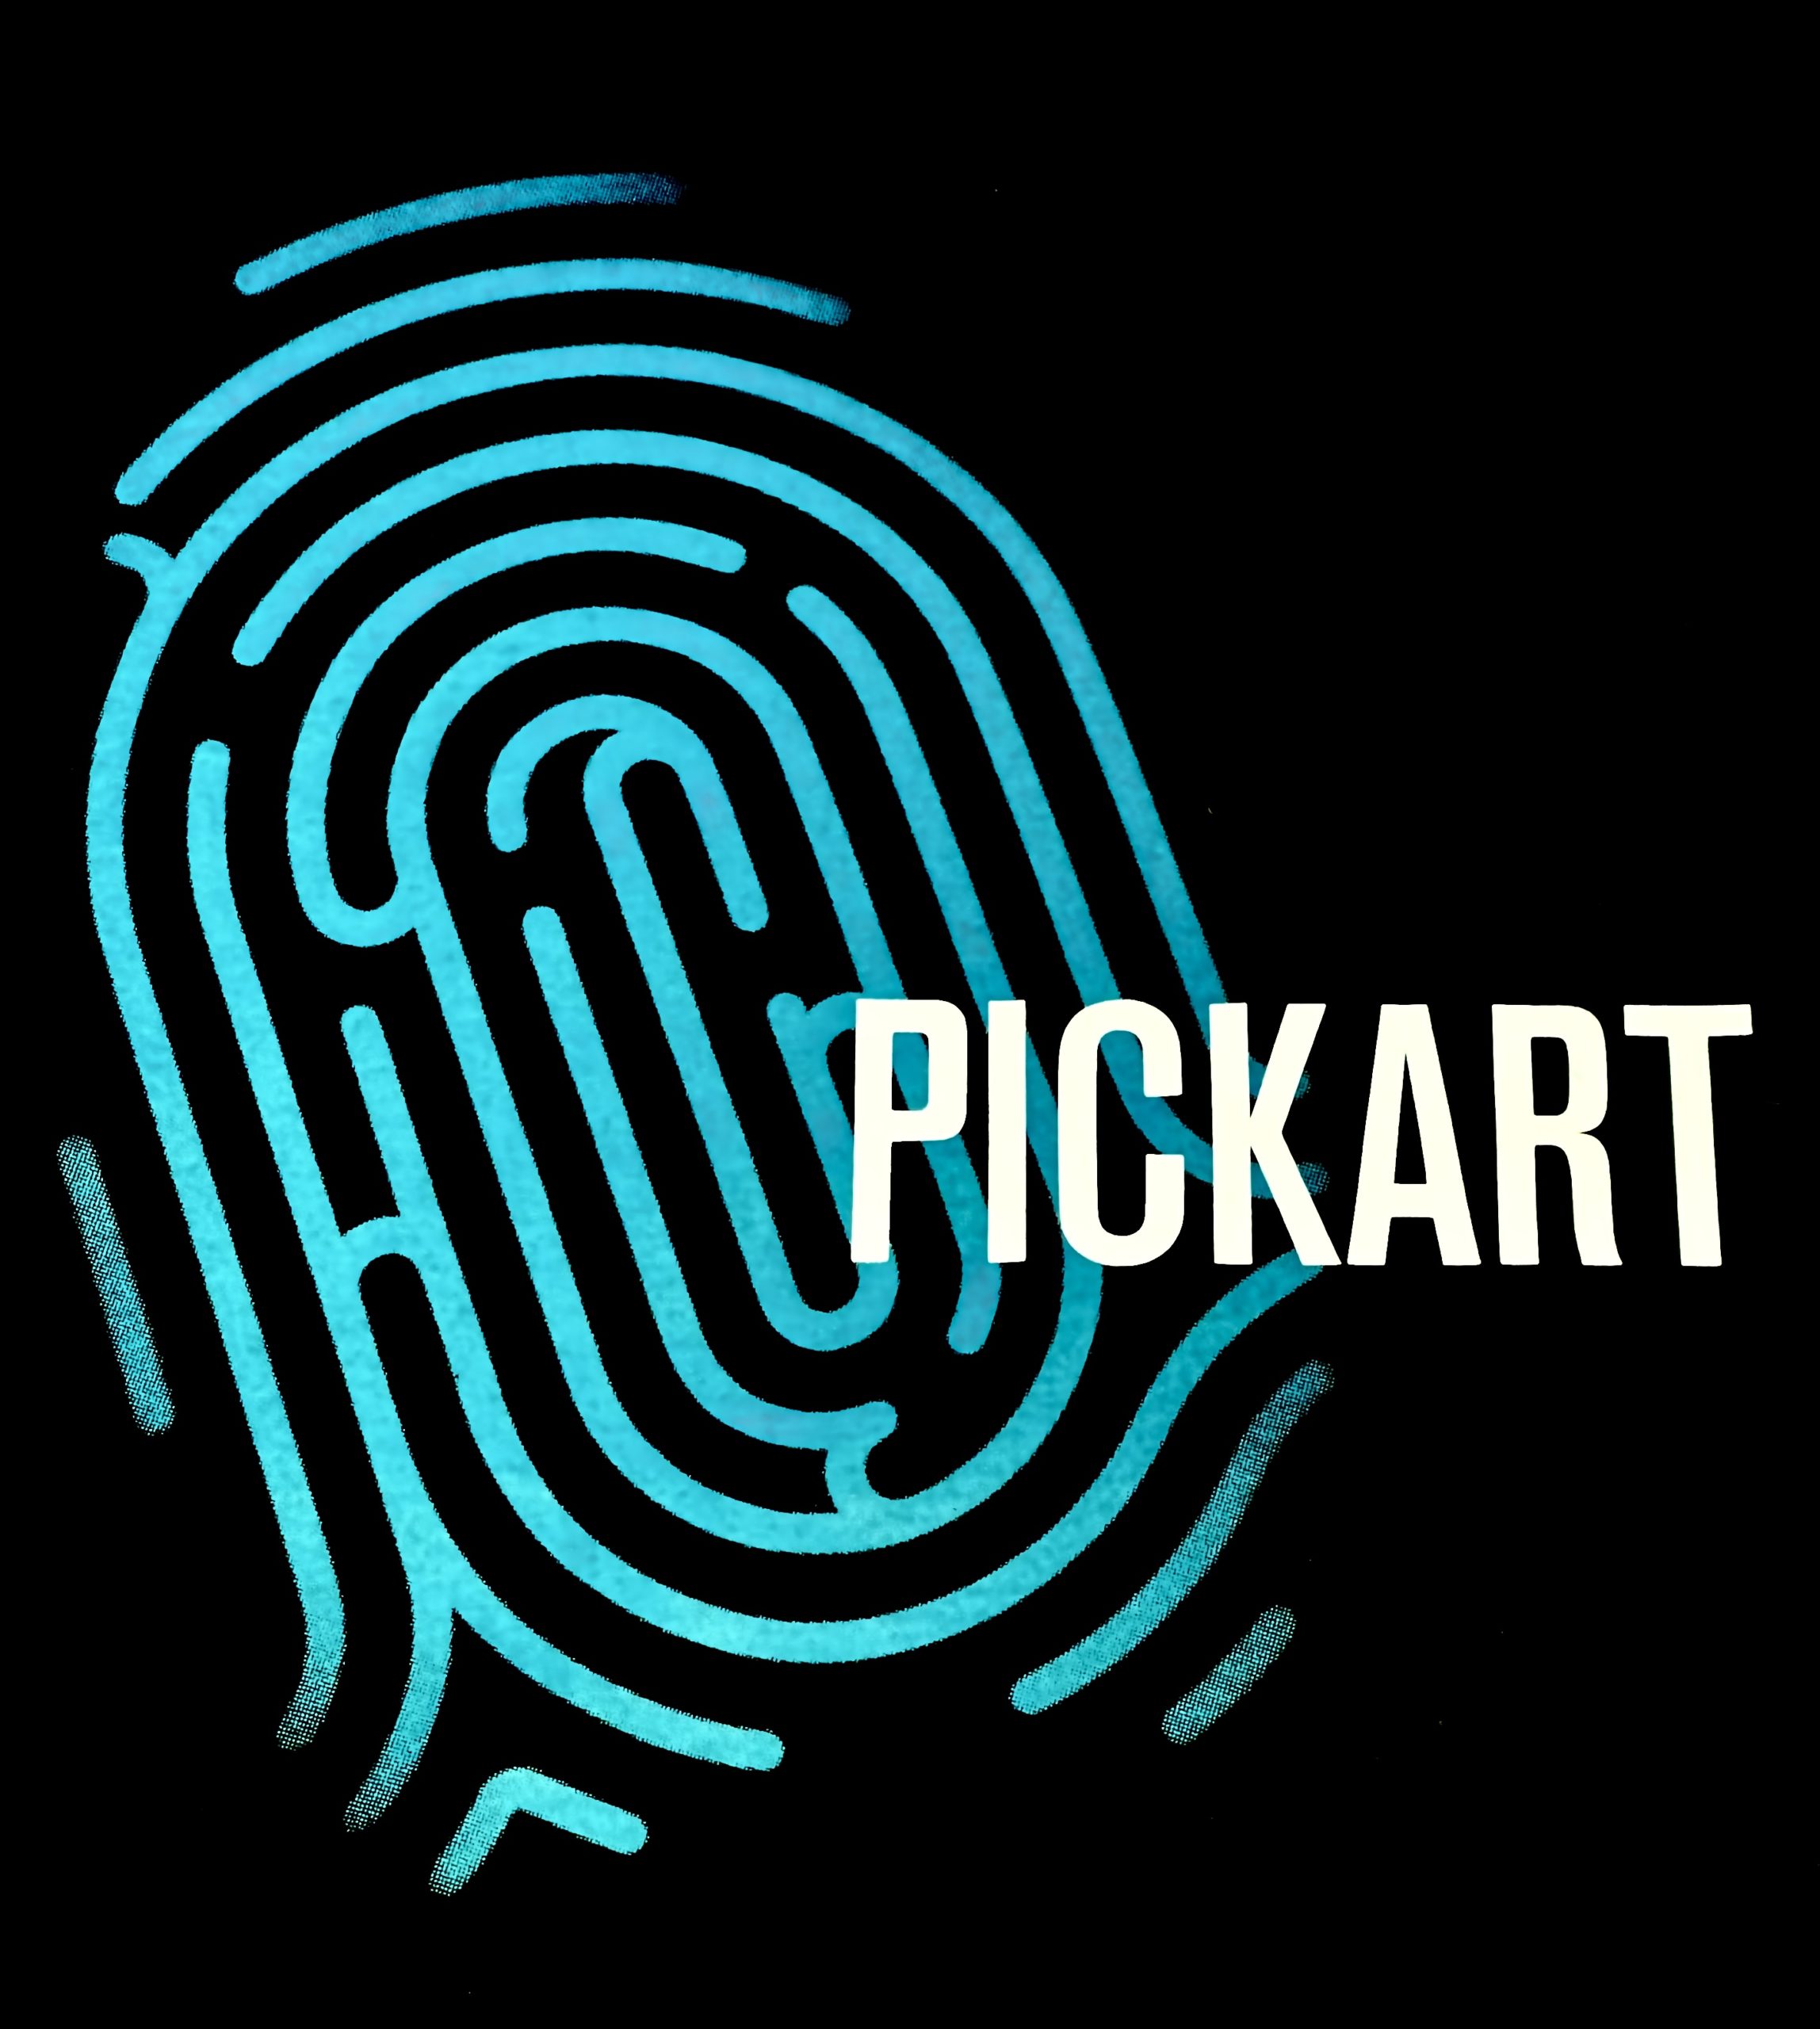 Patrick Pickart Hypnotherapeut bekend van de Mol